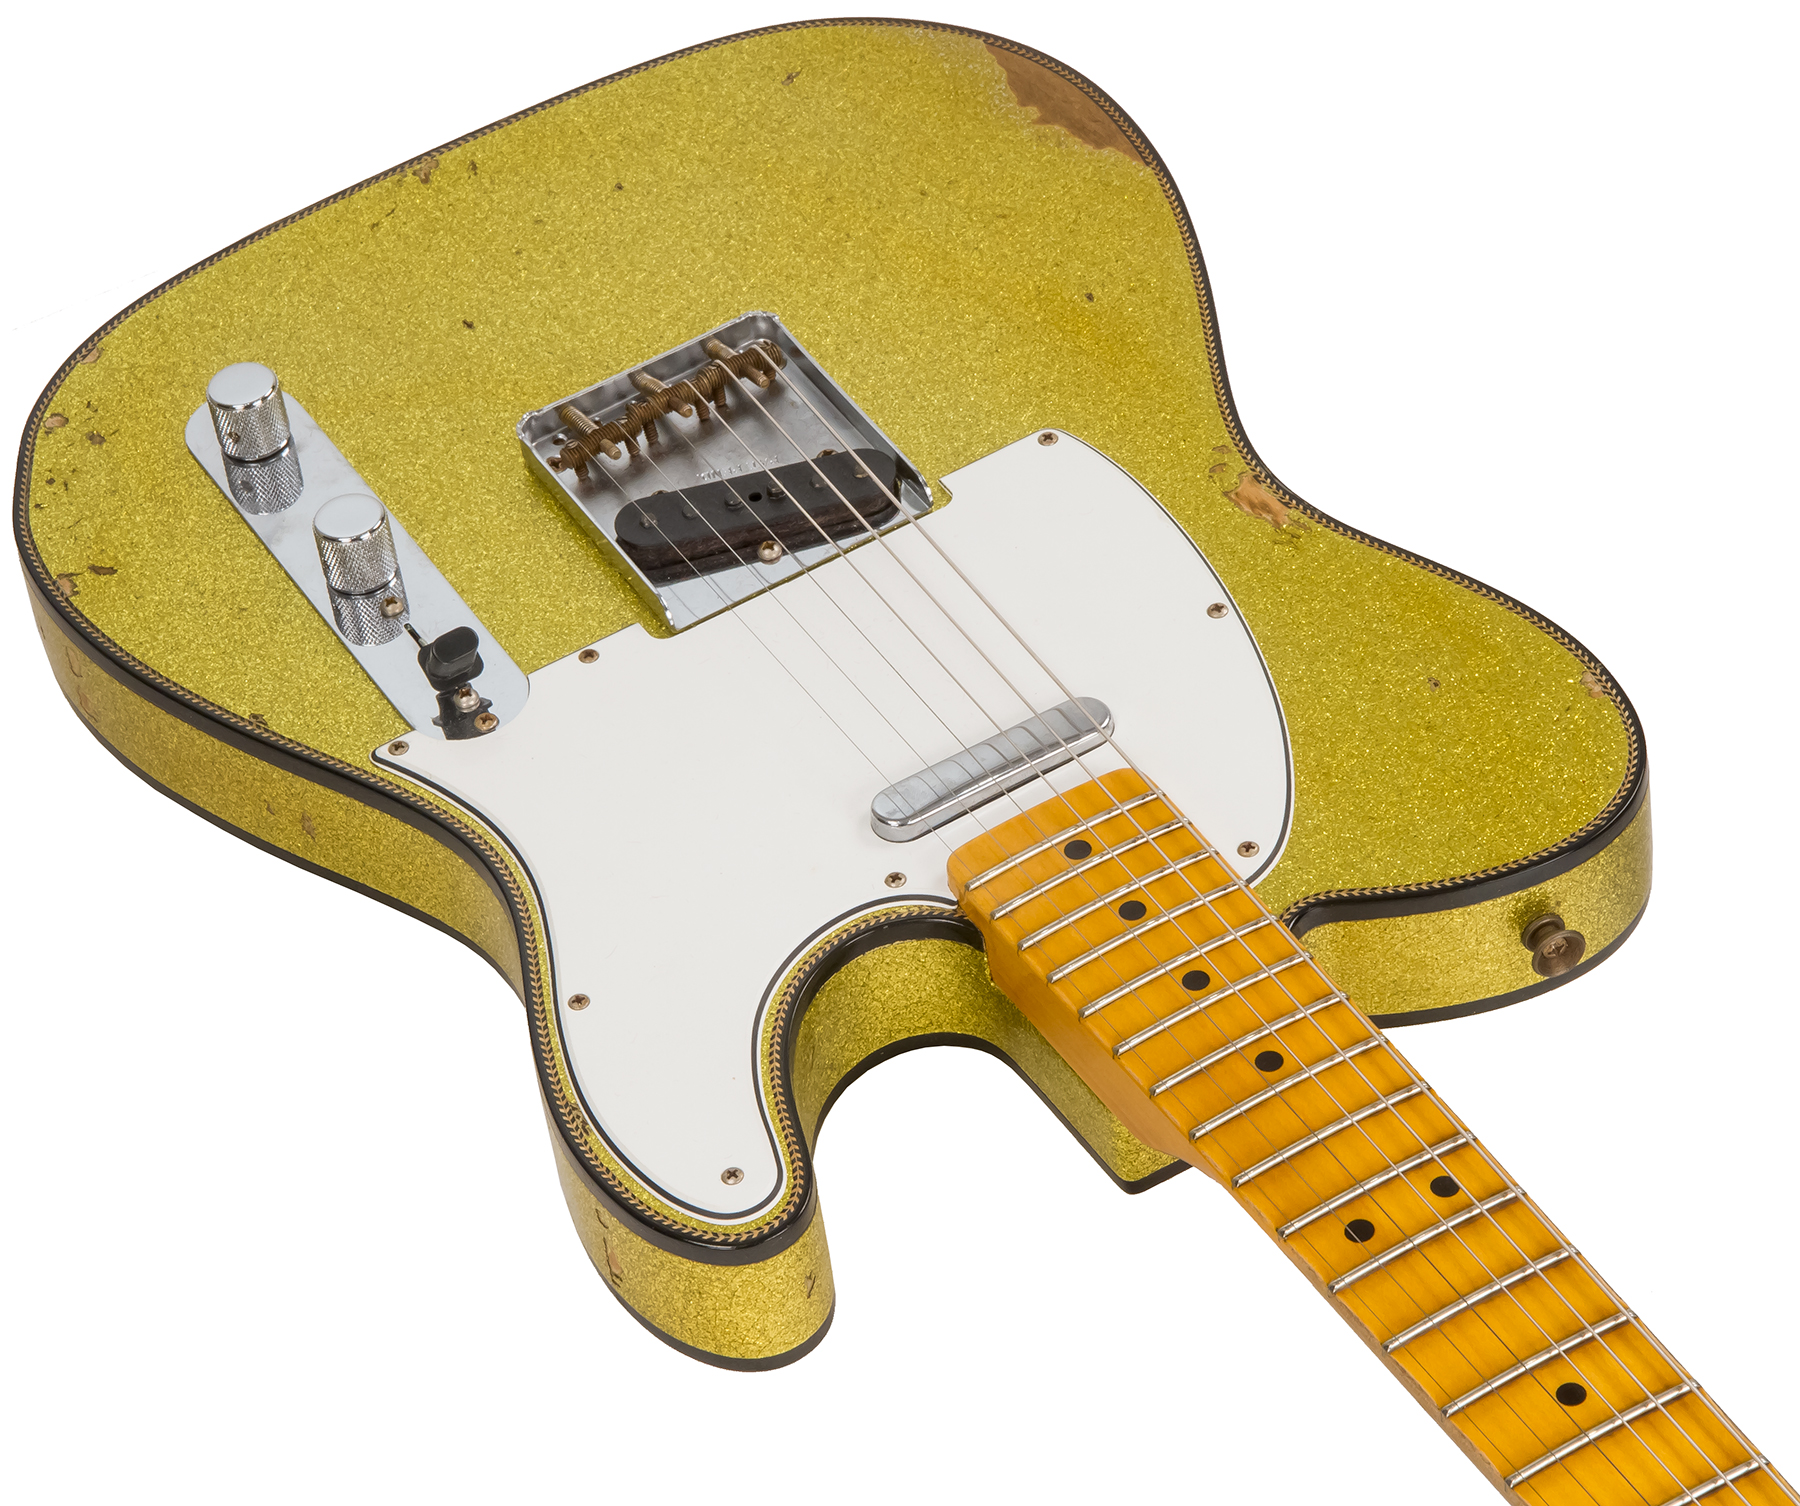 Fender Custom Shop Tele Custom 1963 2020 Ltd Rw #cz545983 - Relic Chartreuse Sparkle - Televorm elektrische gitaar - Variation 2